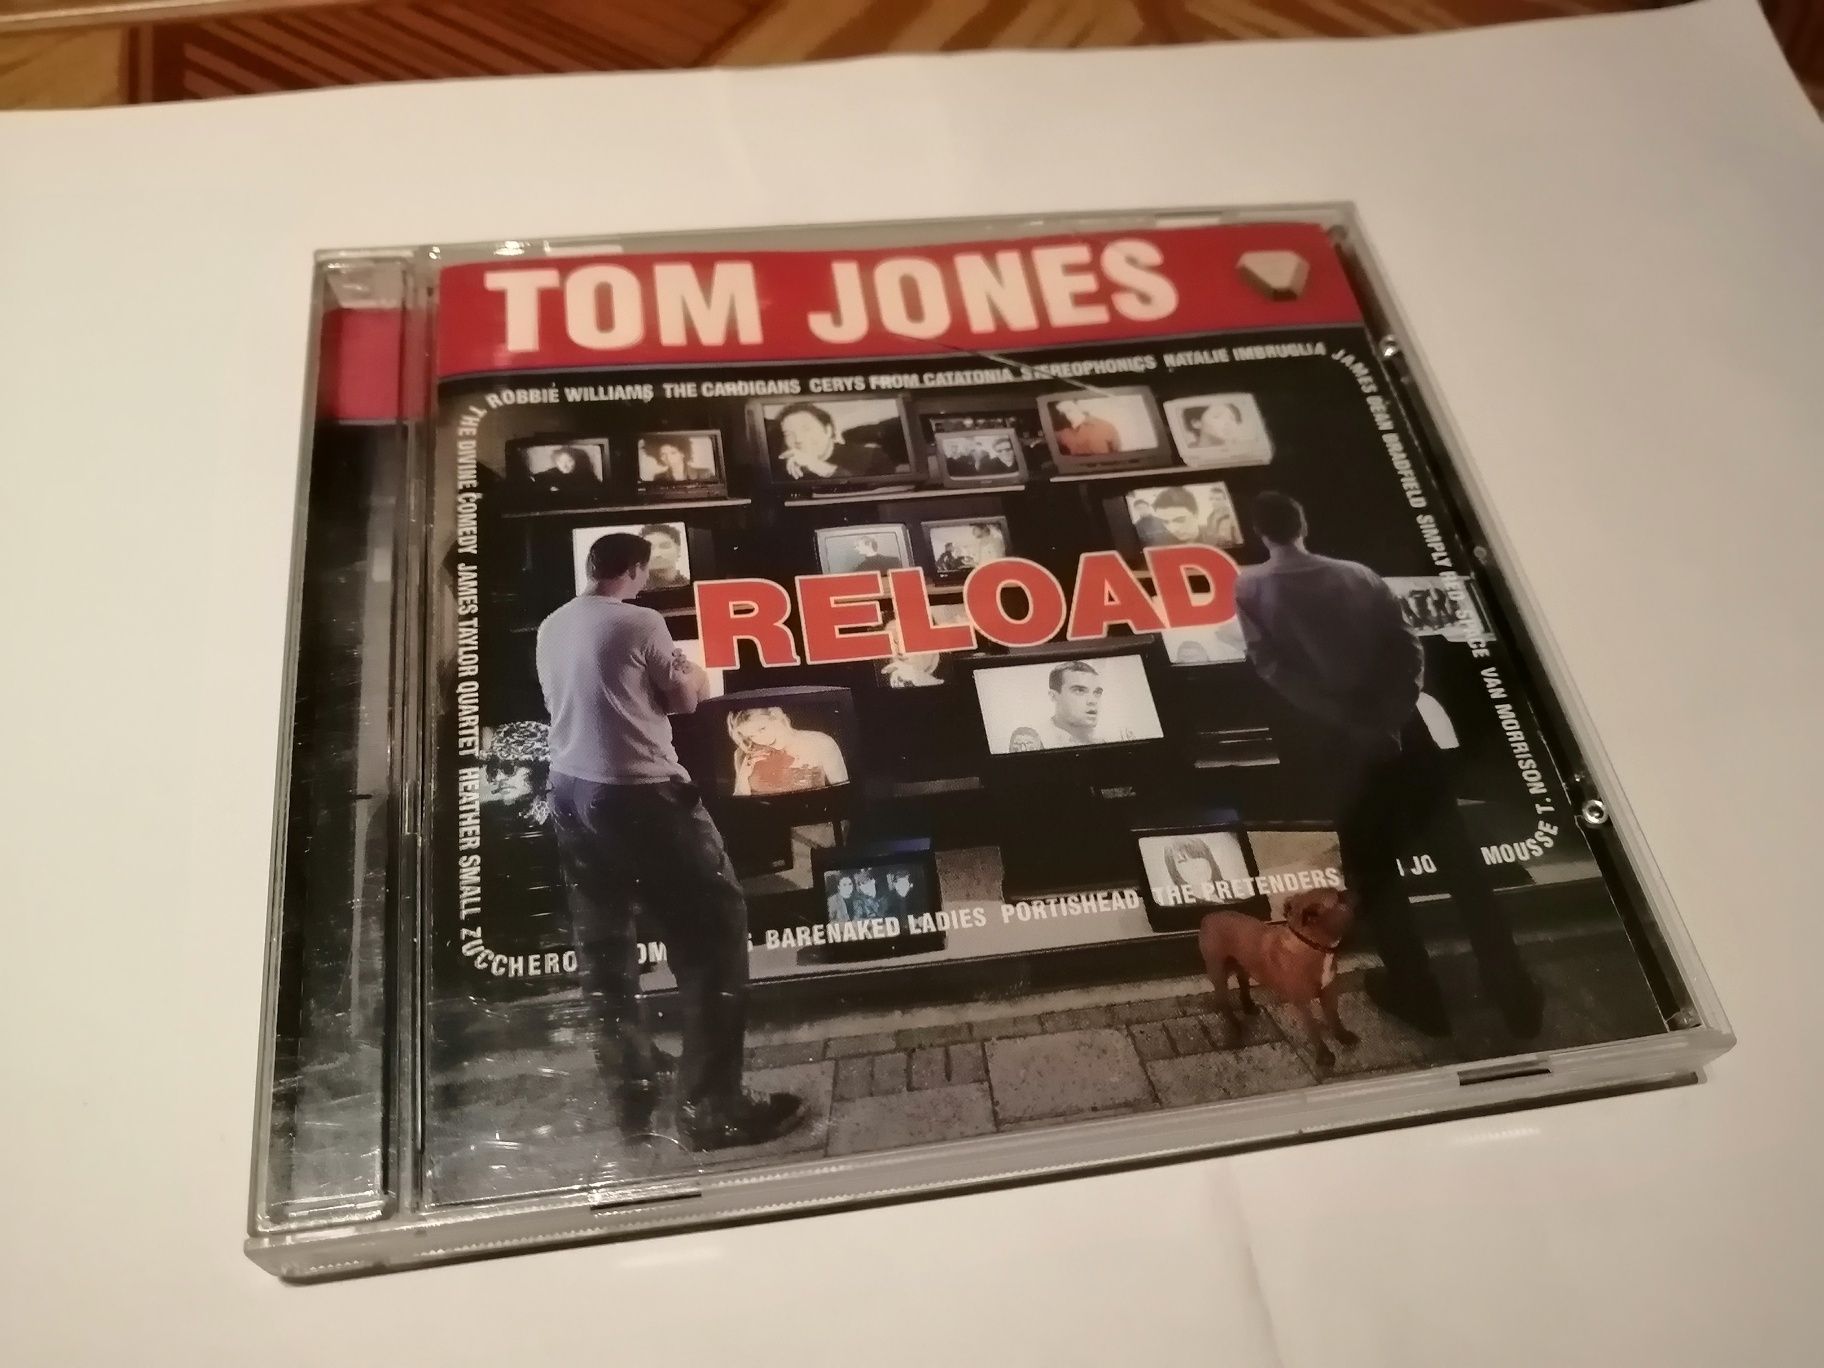 CD Tom Jones